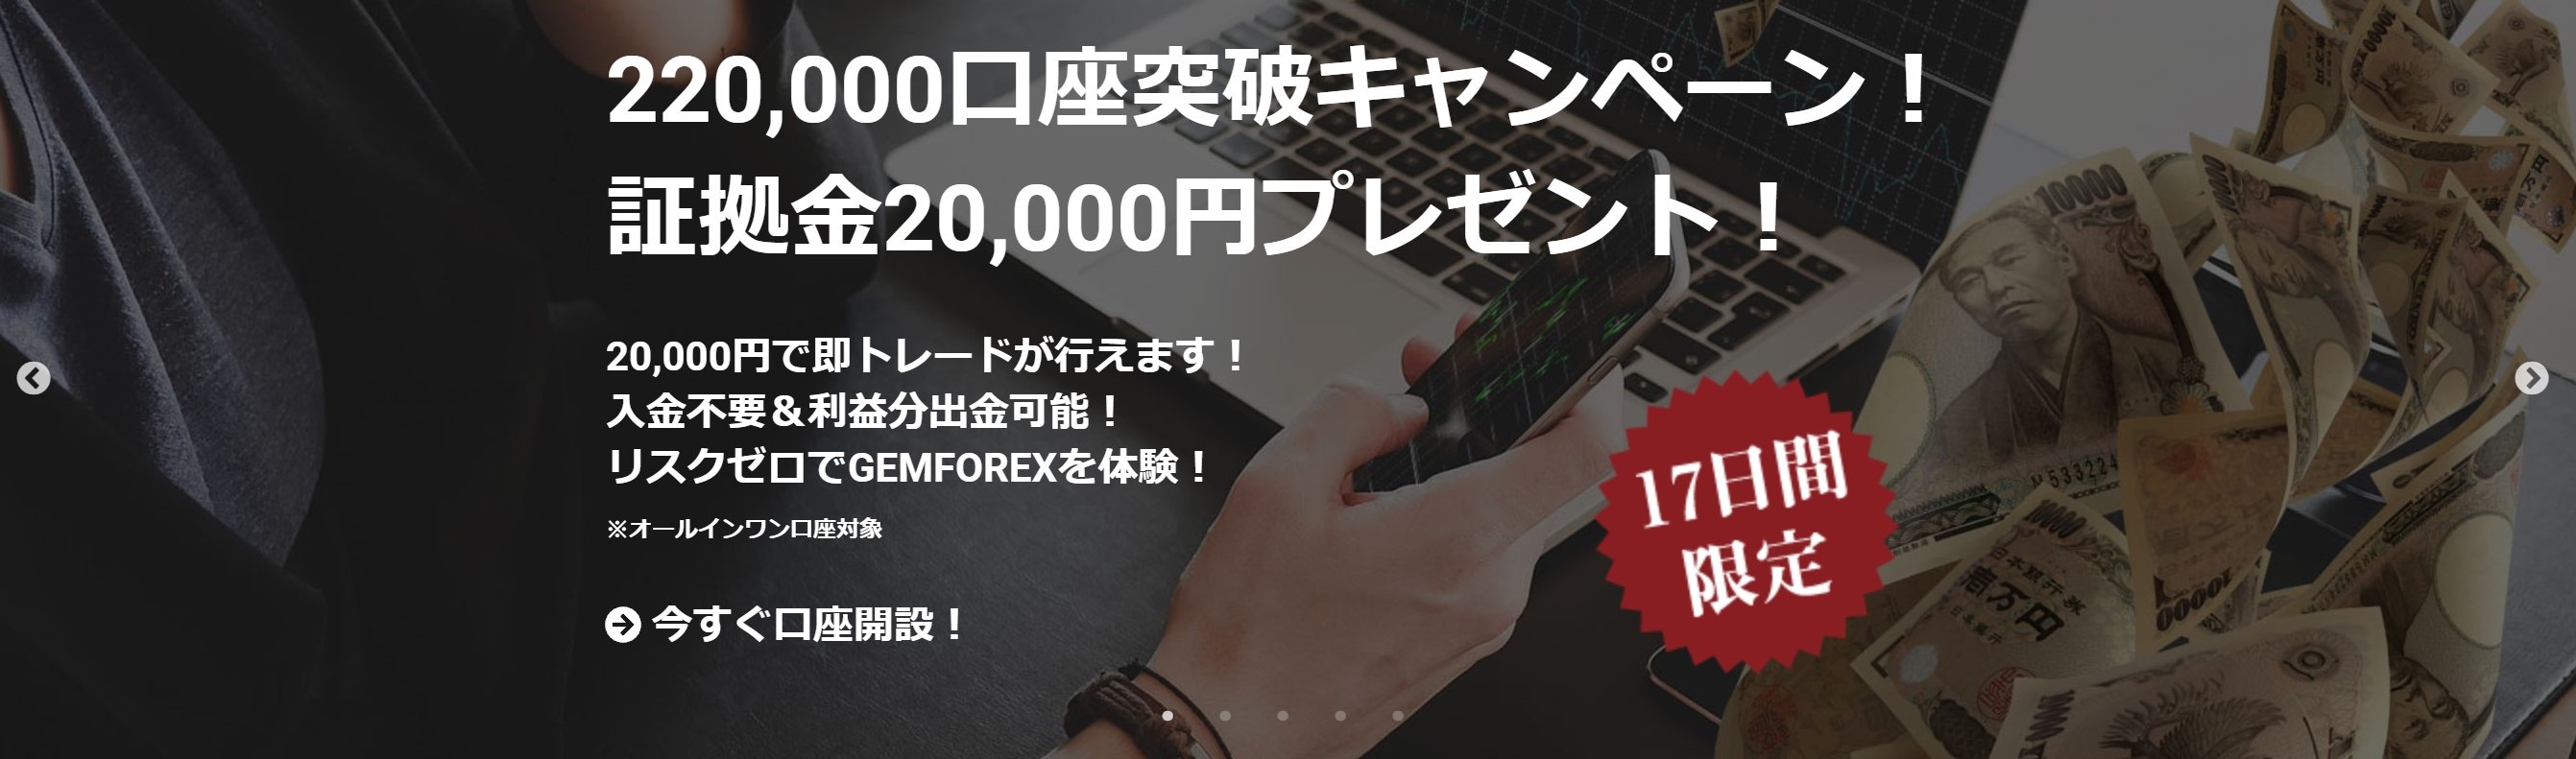 gemforex 新規口座開設2万円キャンペーン